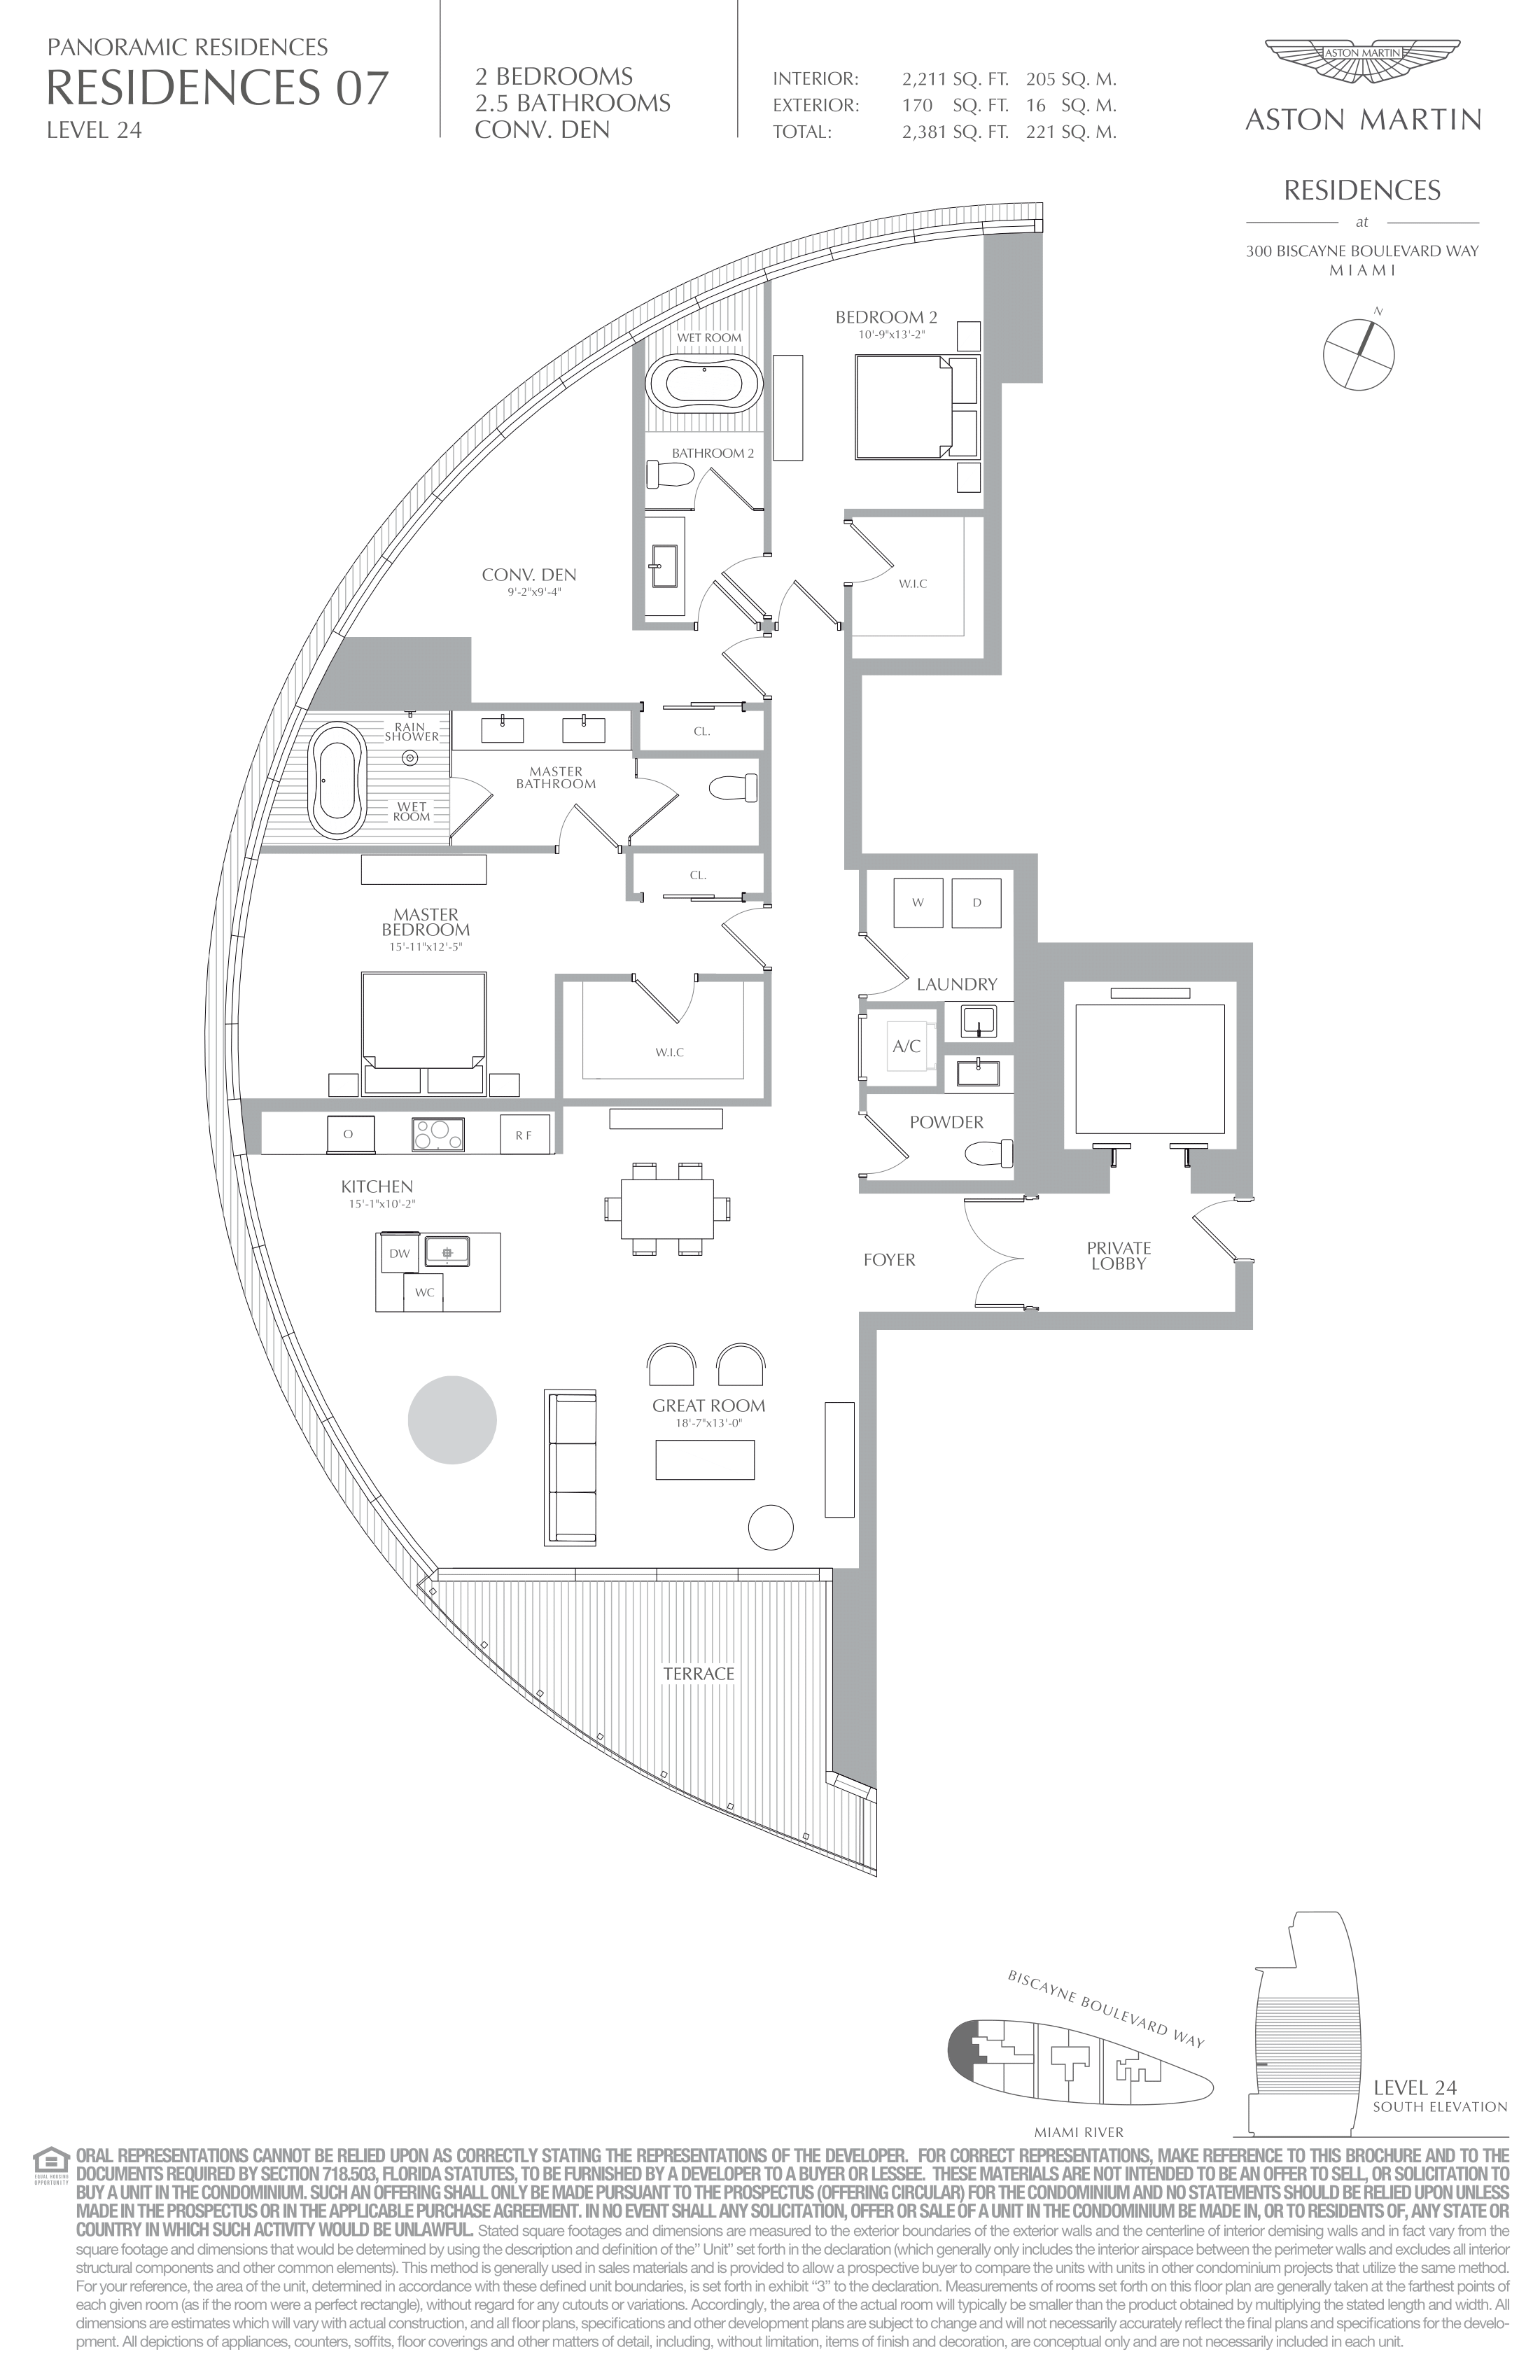 Residence 07 - Level 24